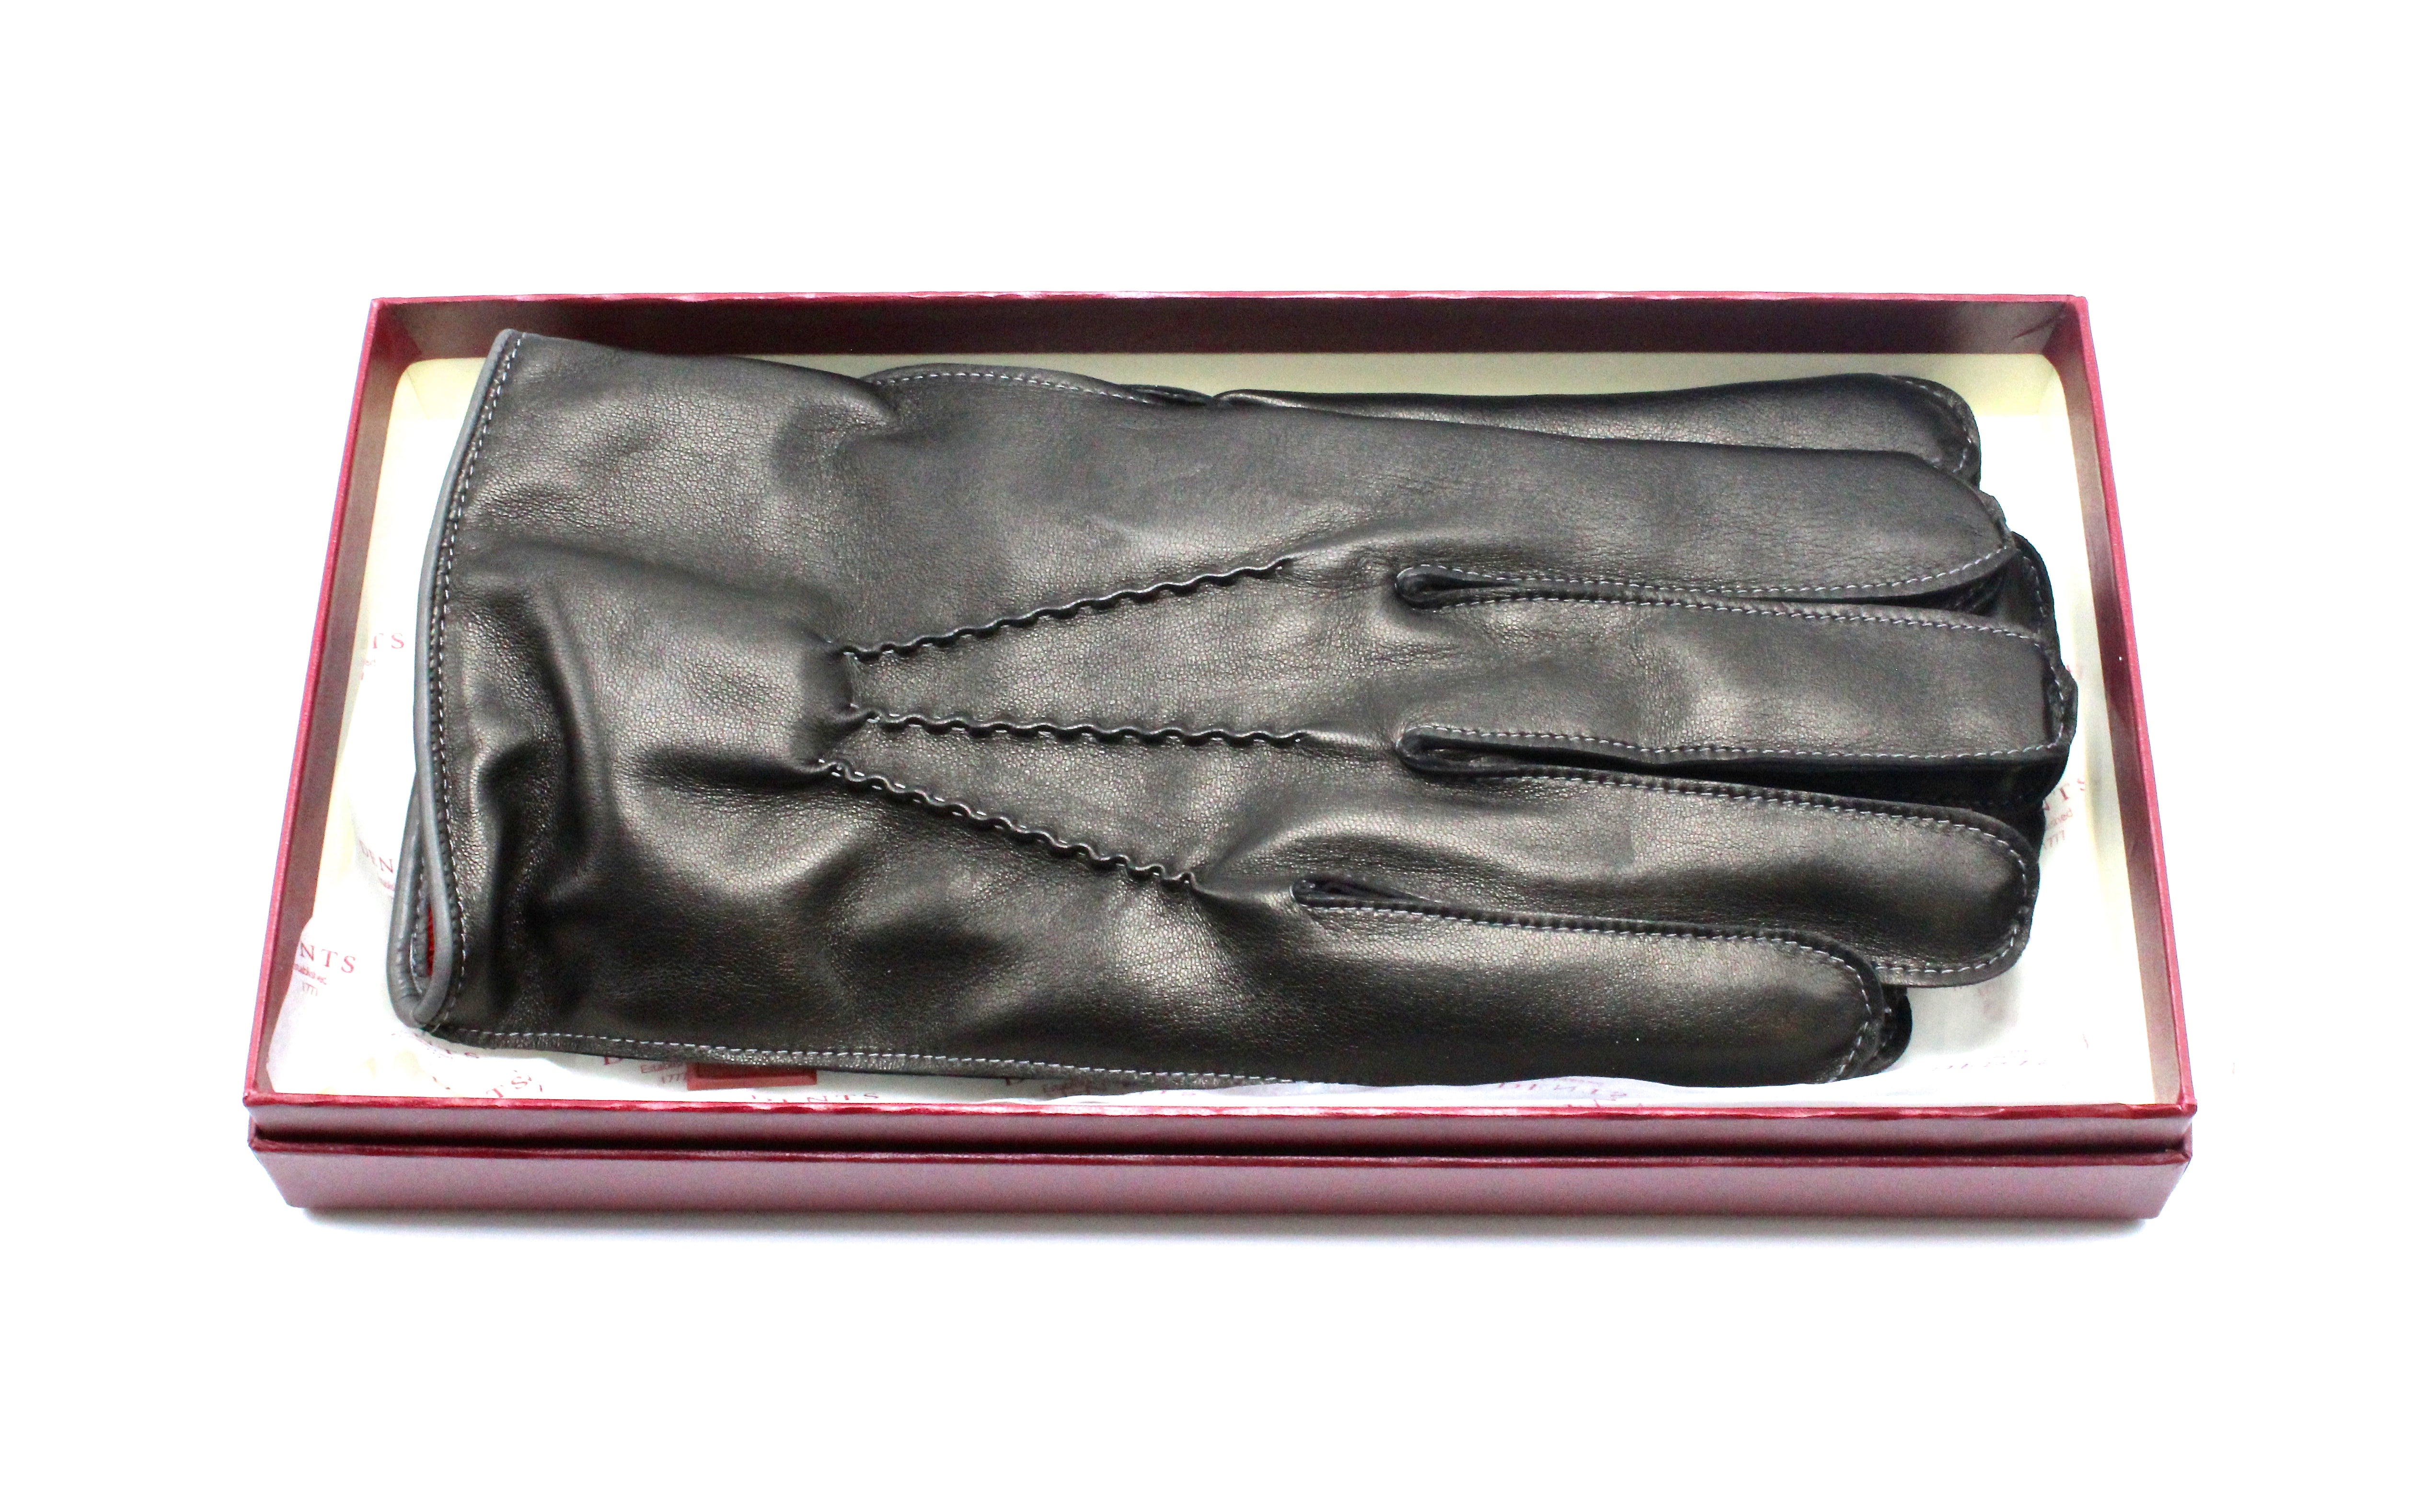 Dents Leather Cashmere-Lined Gloves - Black - 9.5